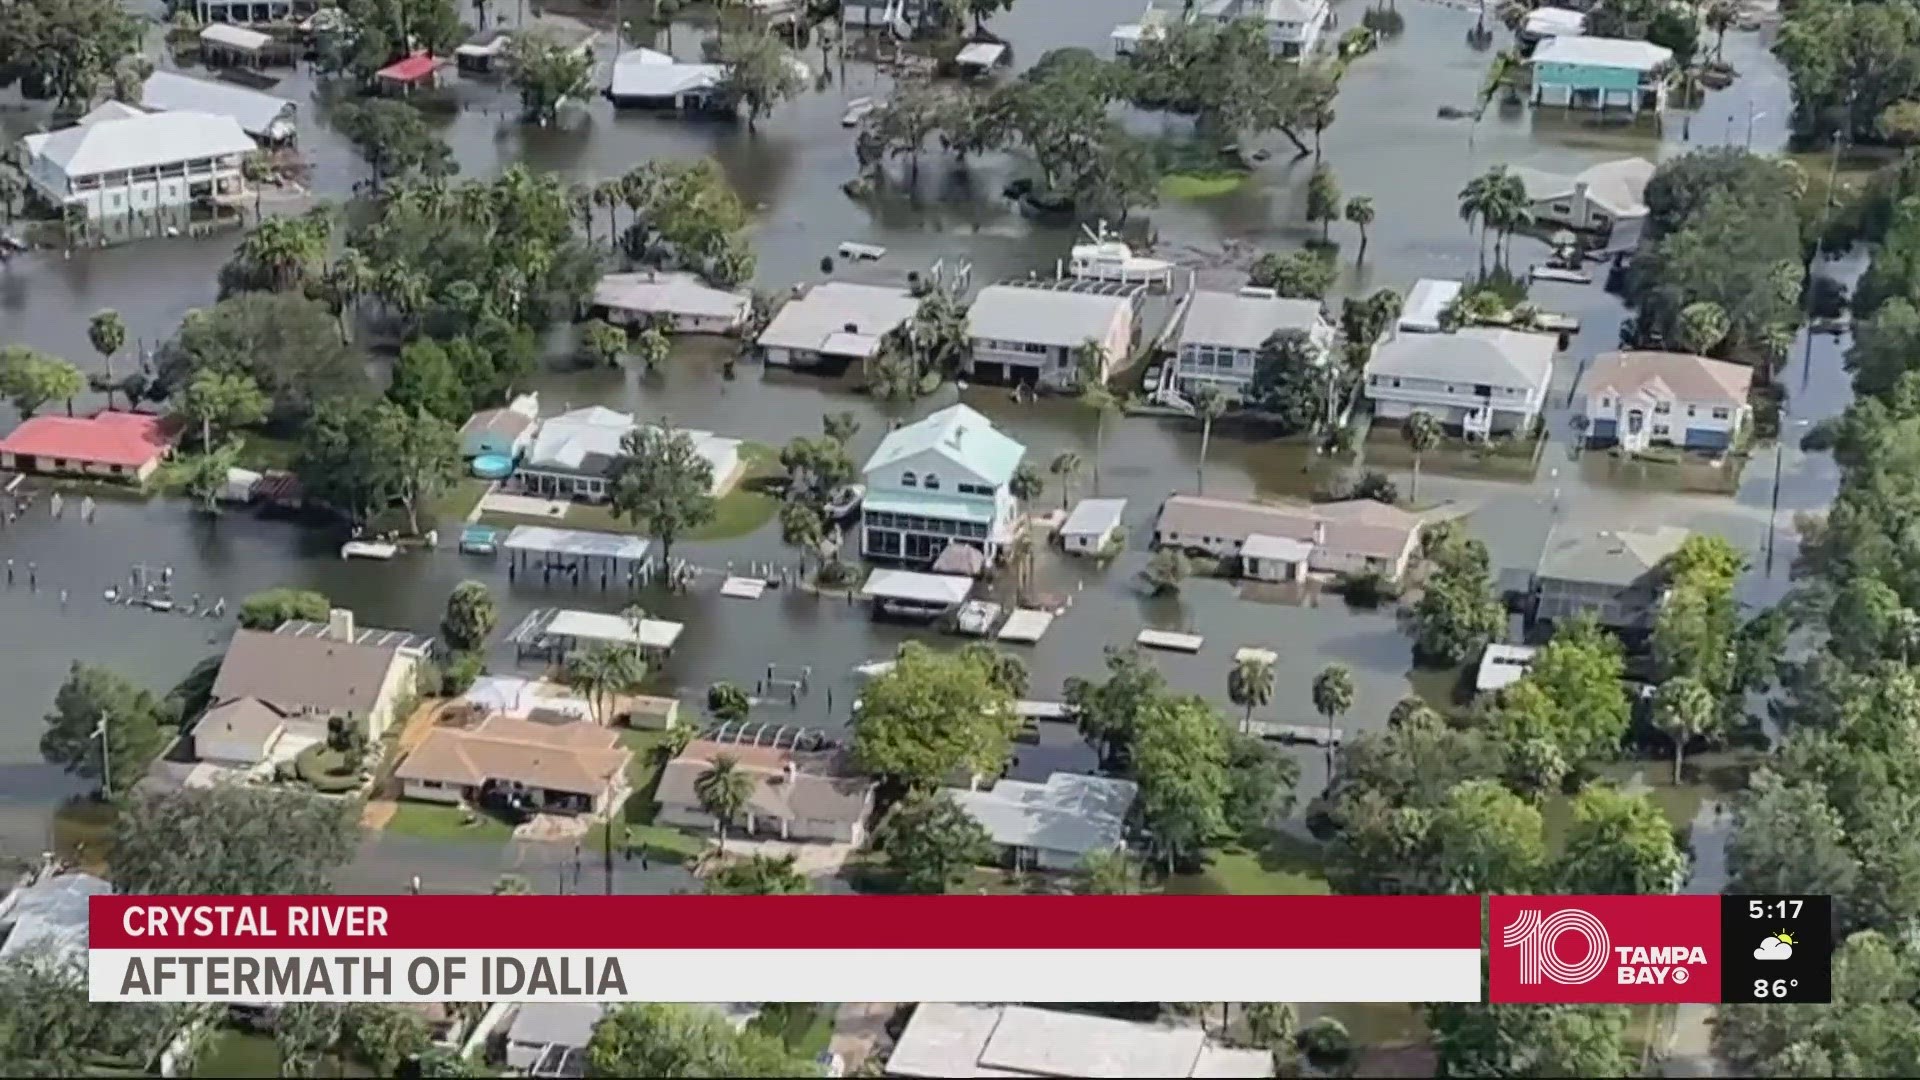 Advice for wind, flood damage insurance claims after Idalia